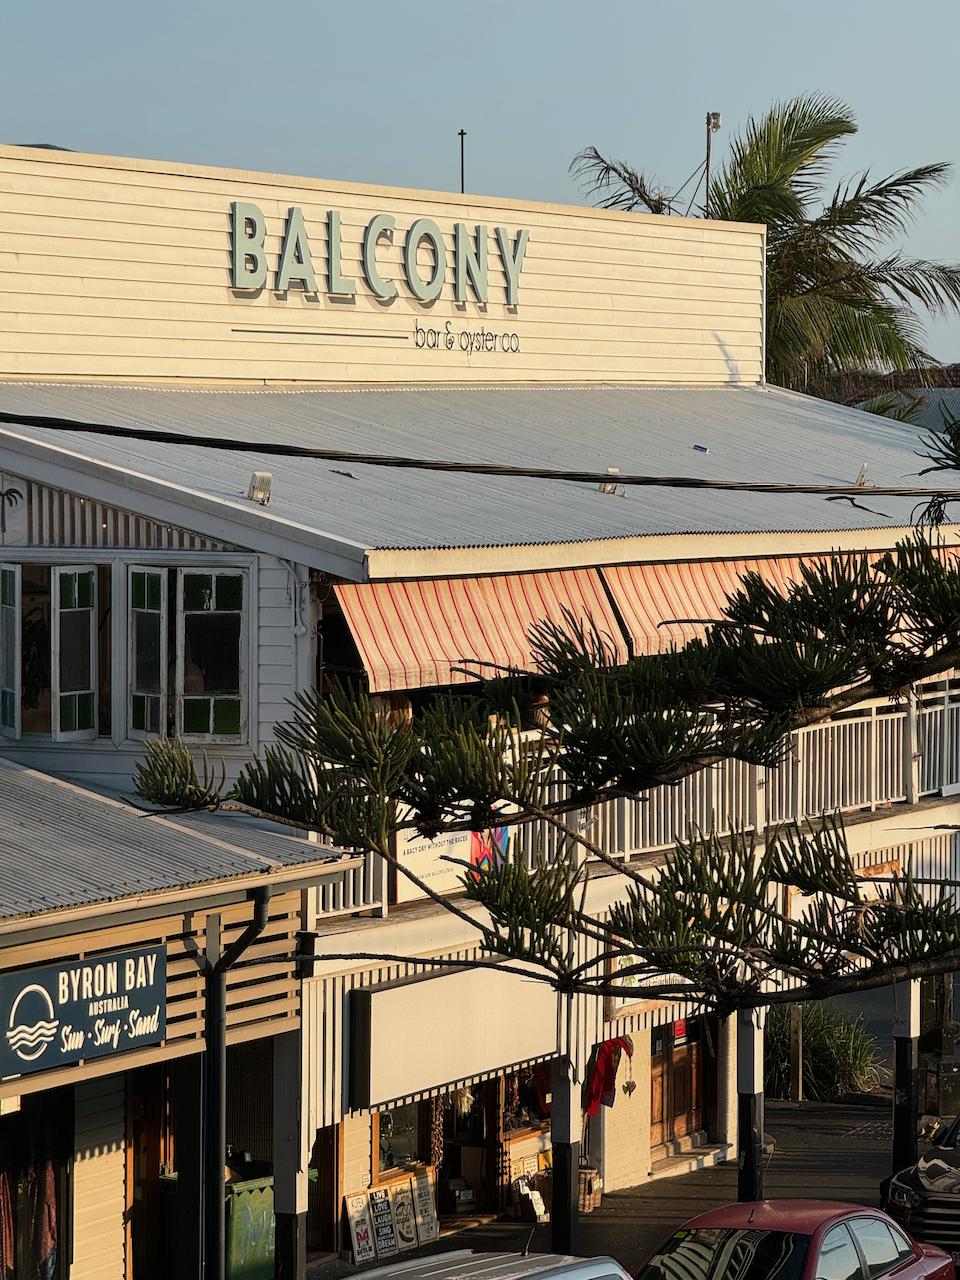 The Balcony - Byron Bay - New South Wales - Australia